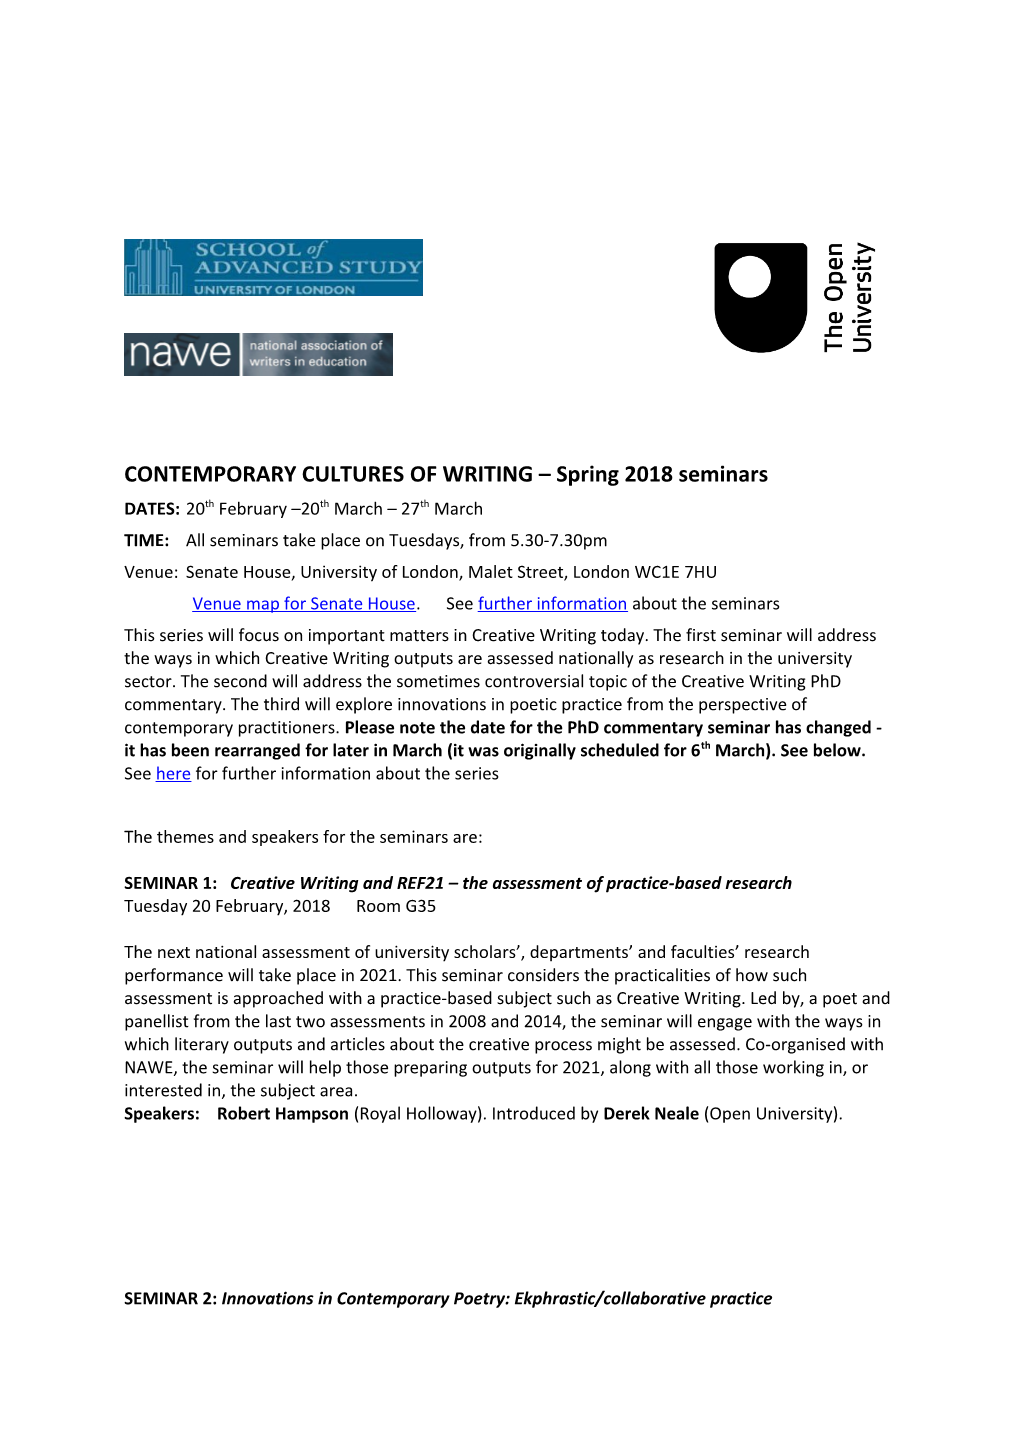 CONTEMPORARY CULTURES of WRITING Spring 2018 Seminars